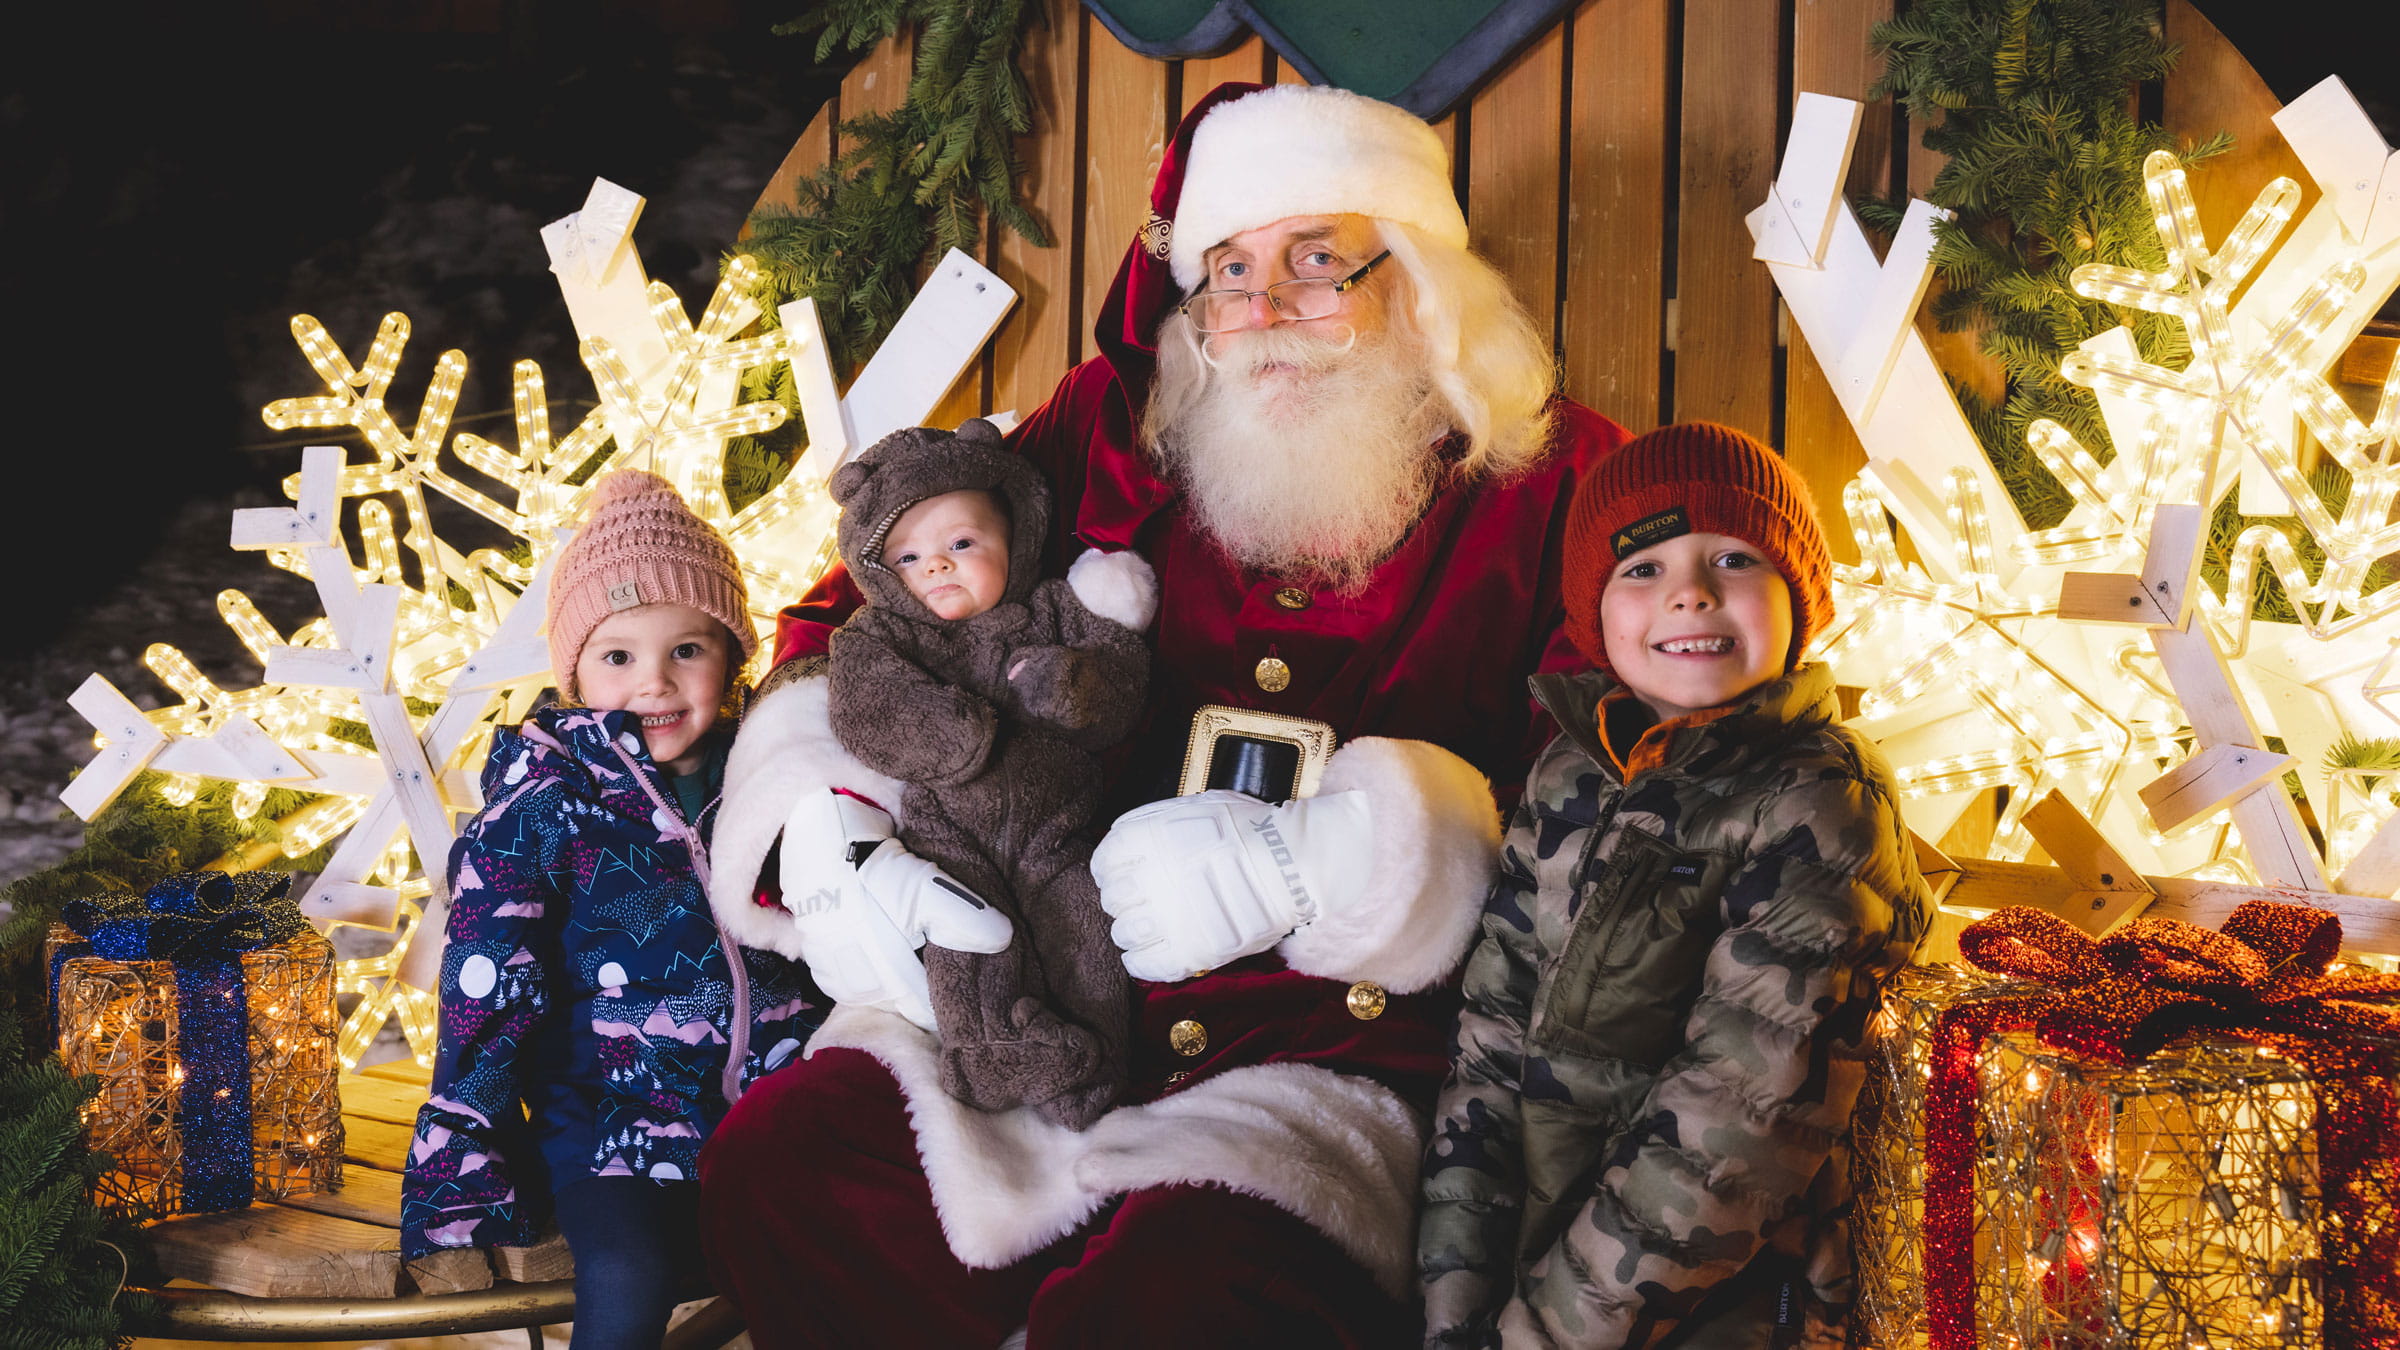 Santa taking a photo with 3 kids